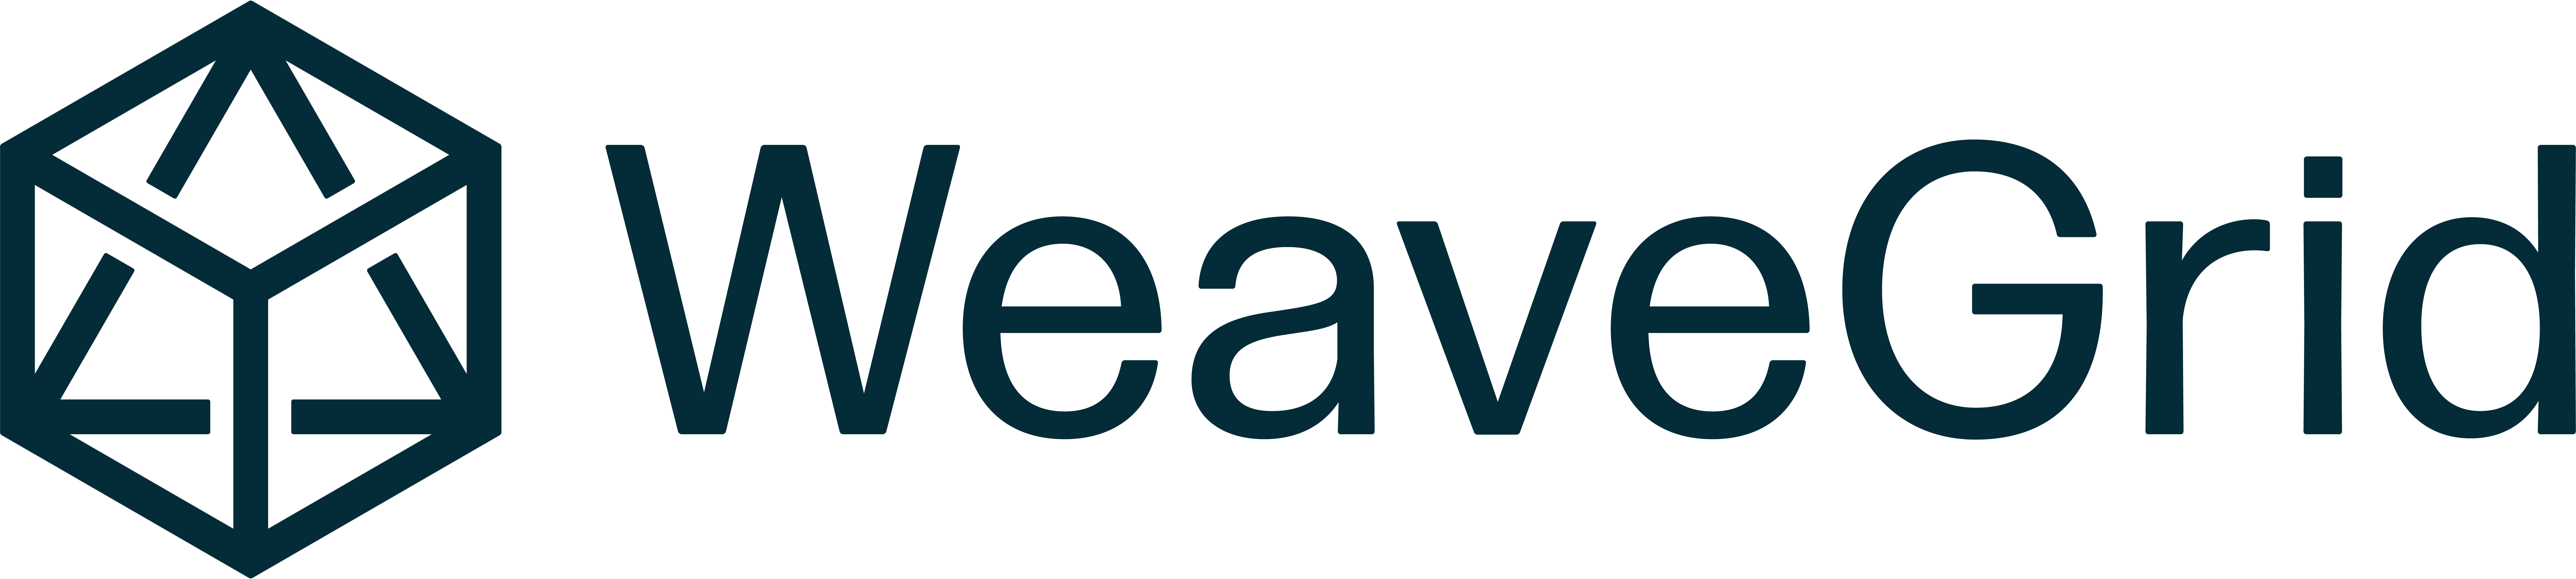 Weavegrid Logo Deepteal